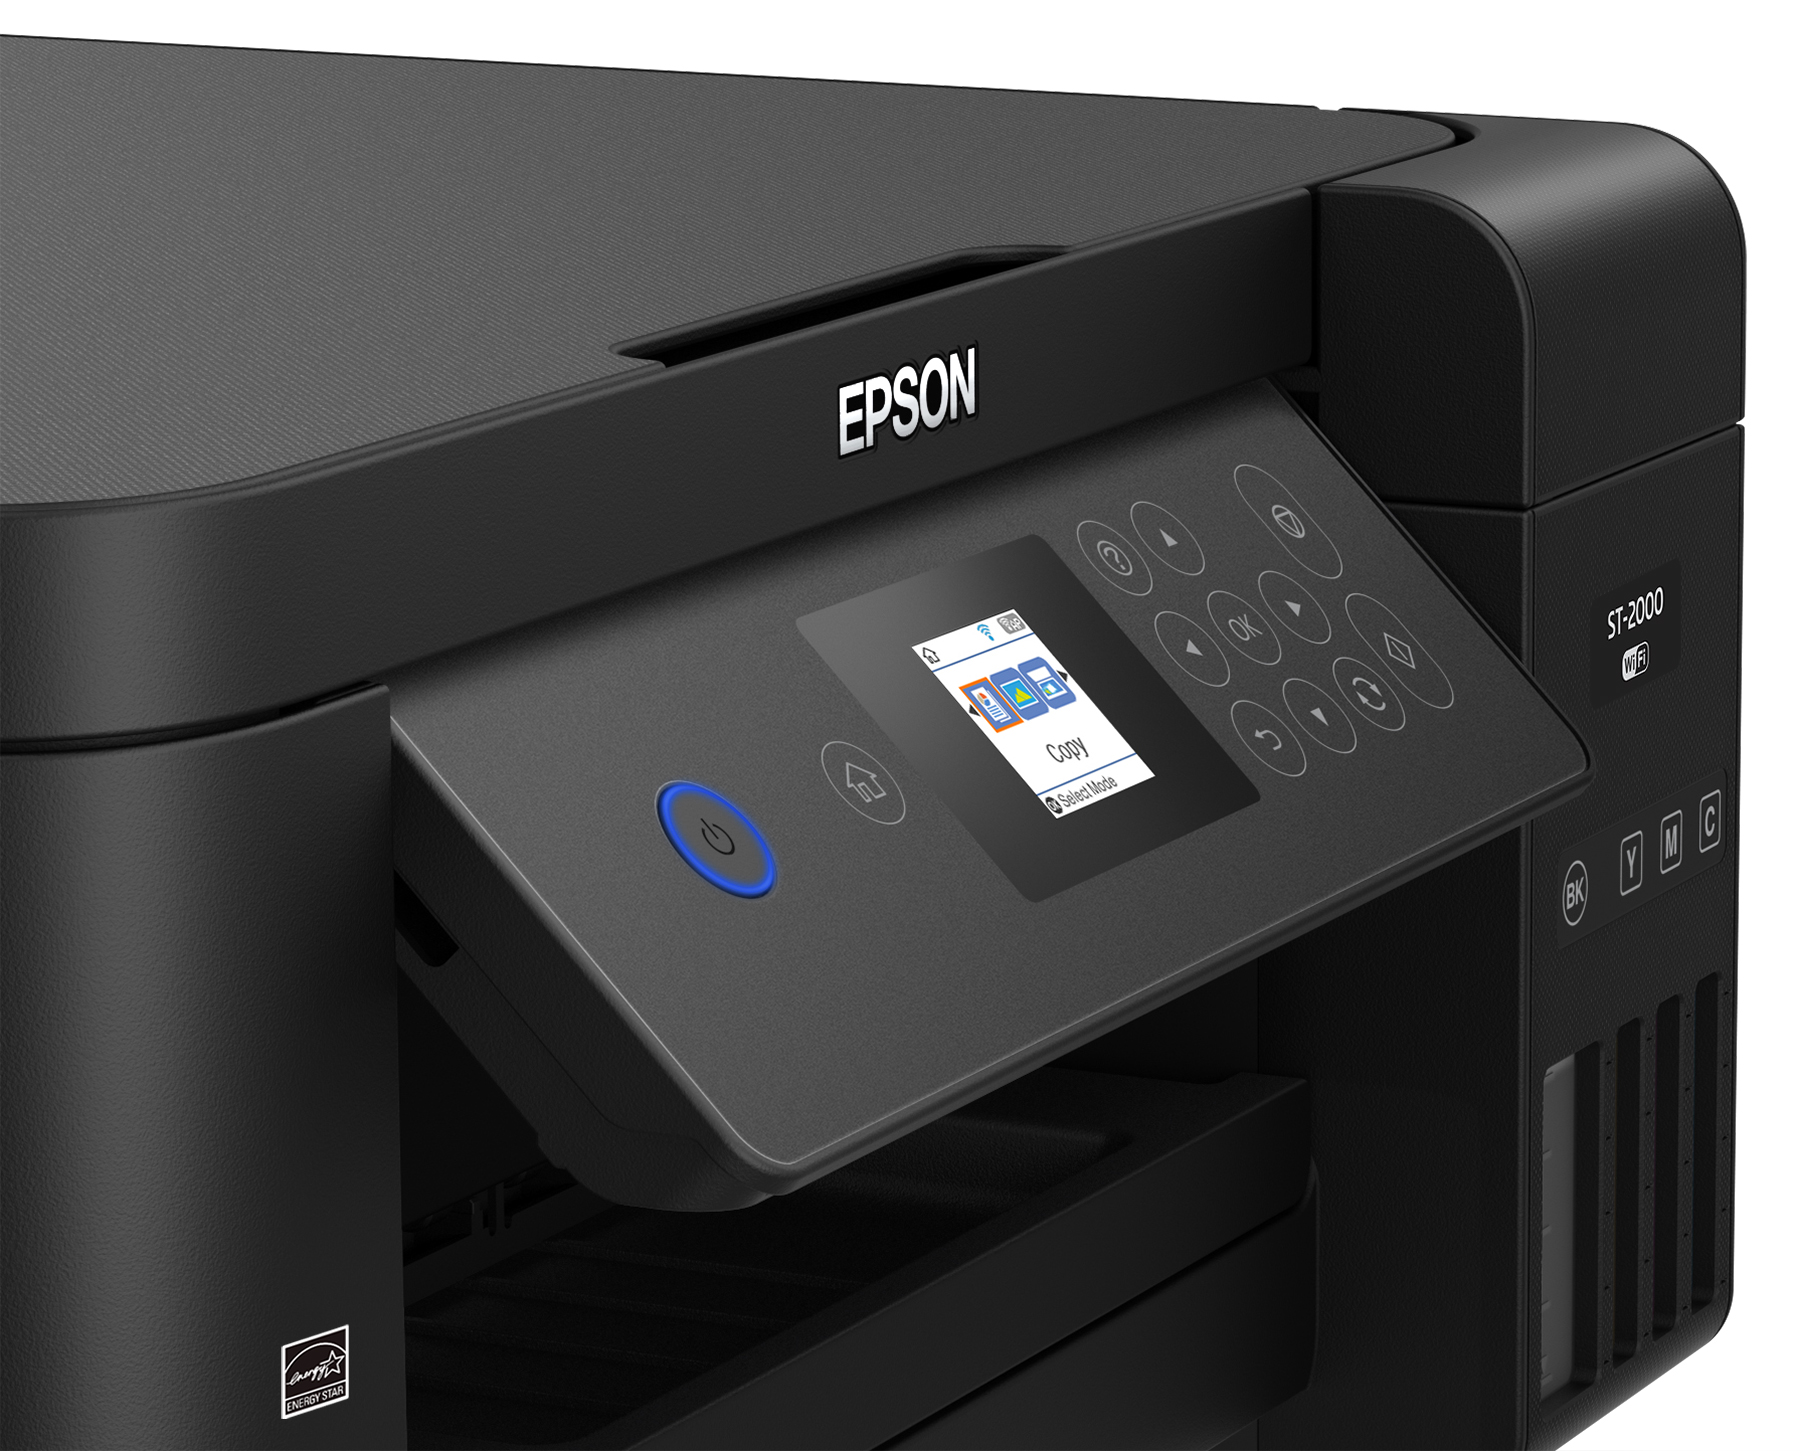  Impresora Epson WorkForce ST-2000, Multifuncion,Wifi, Impresion automatica doble cara Color MFP, Supertank 